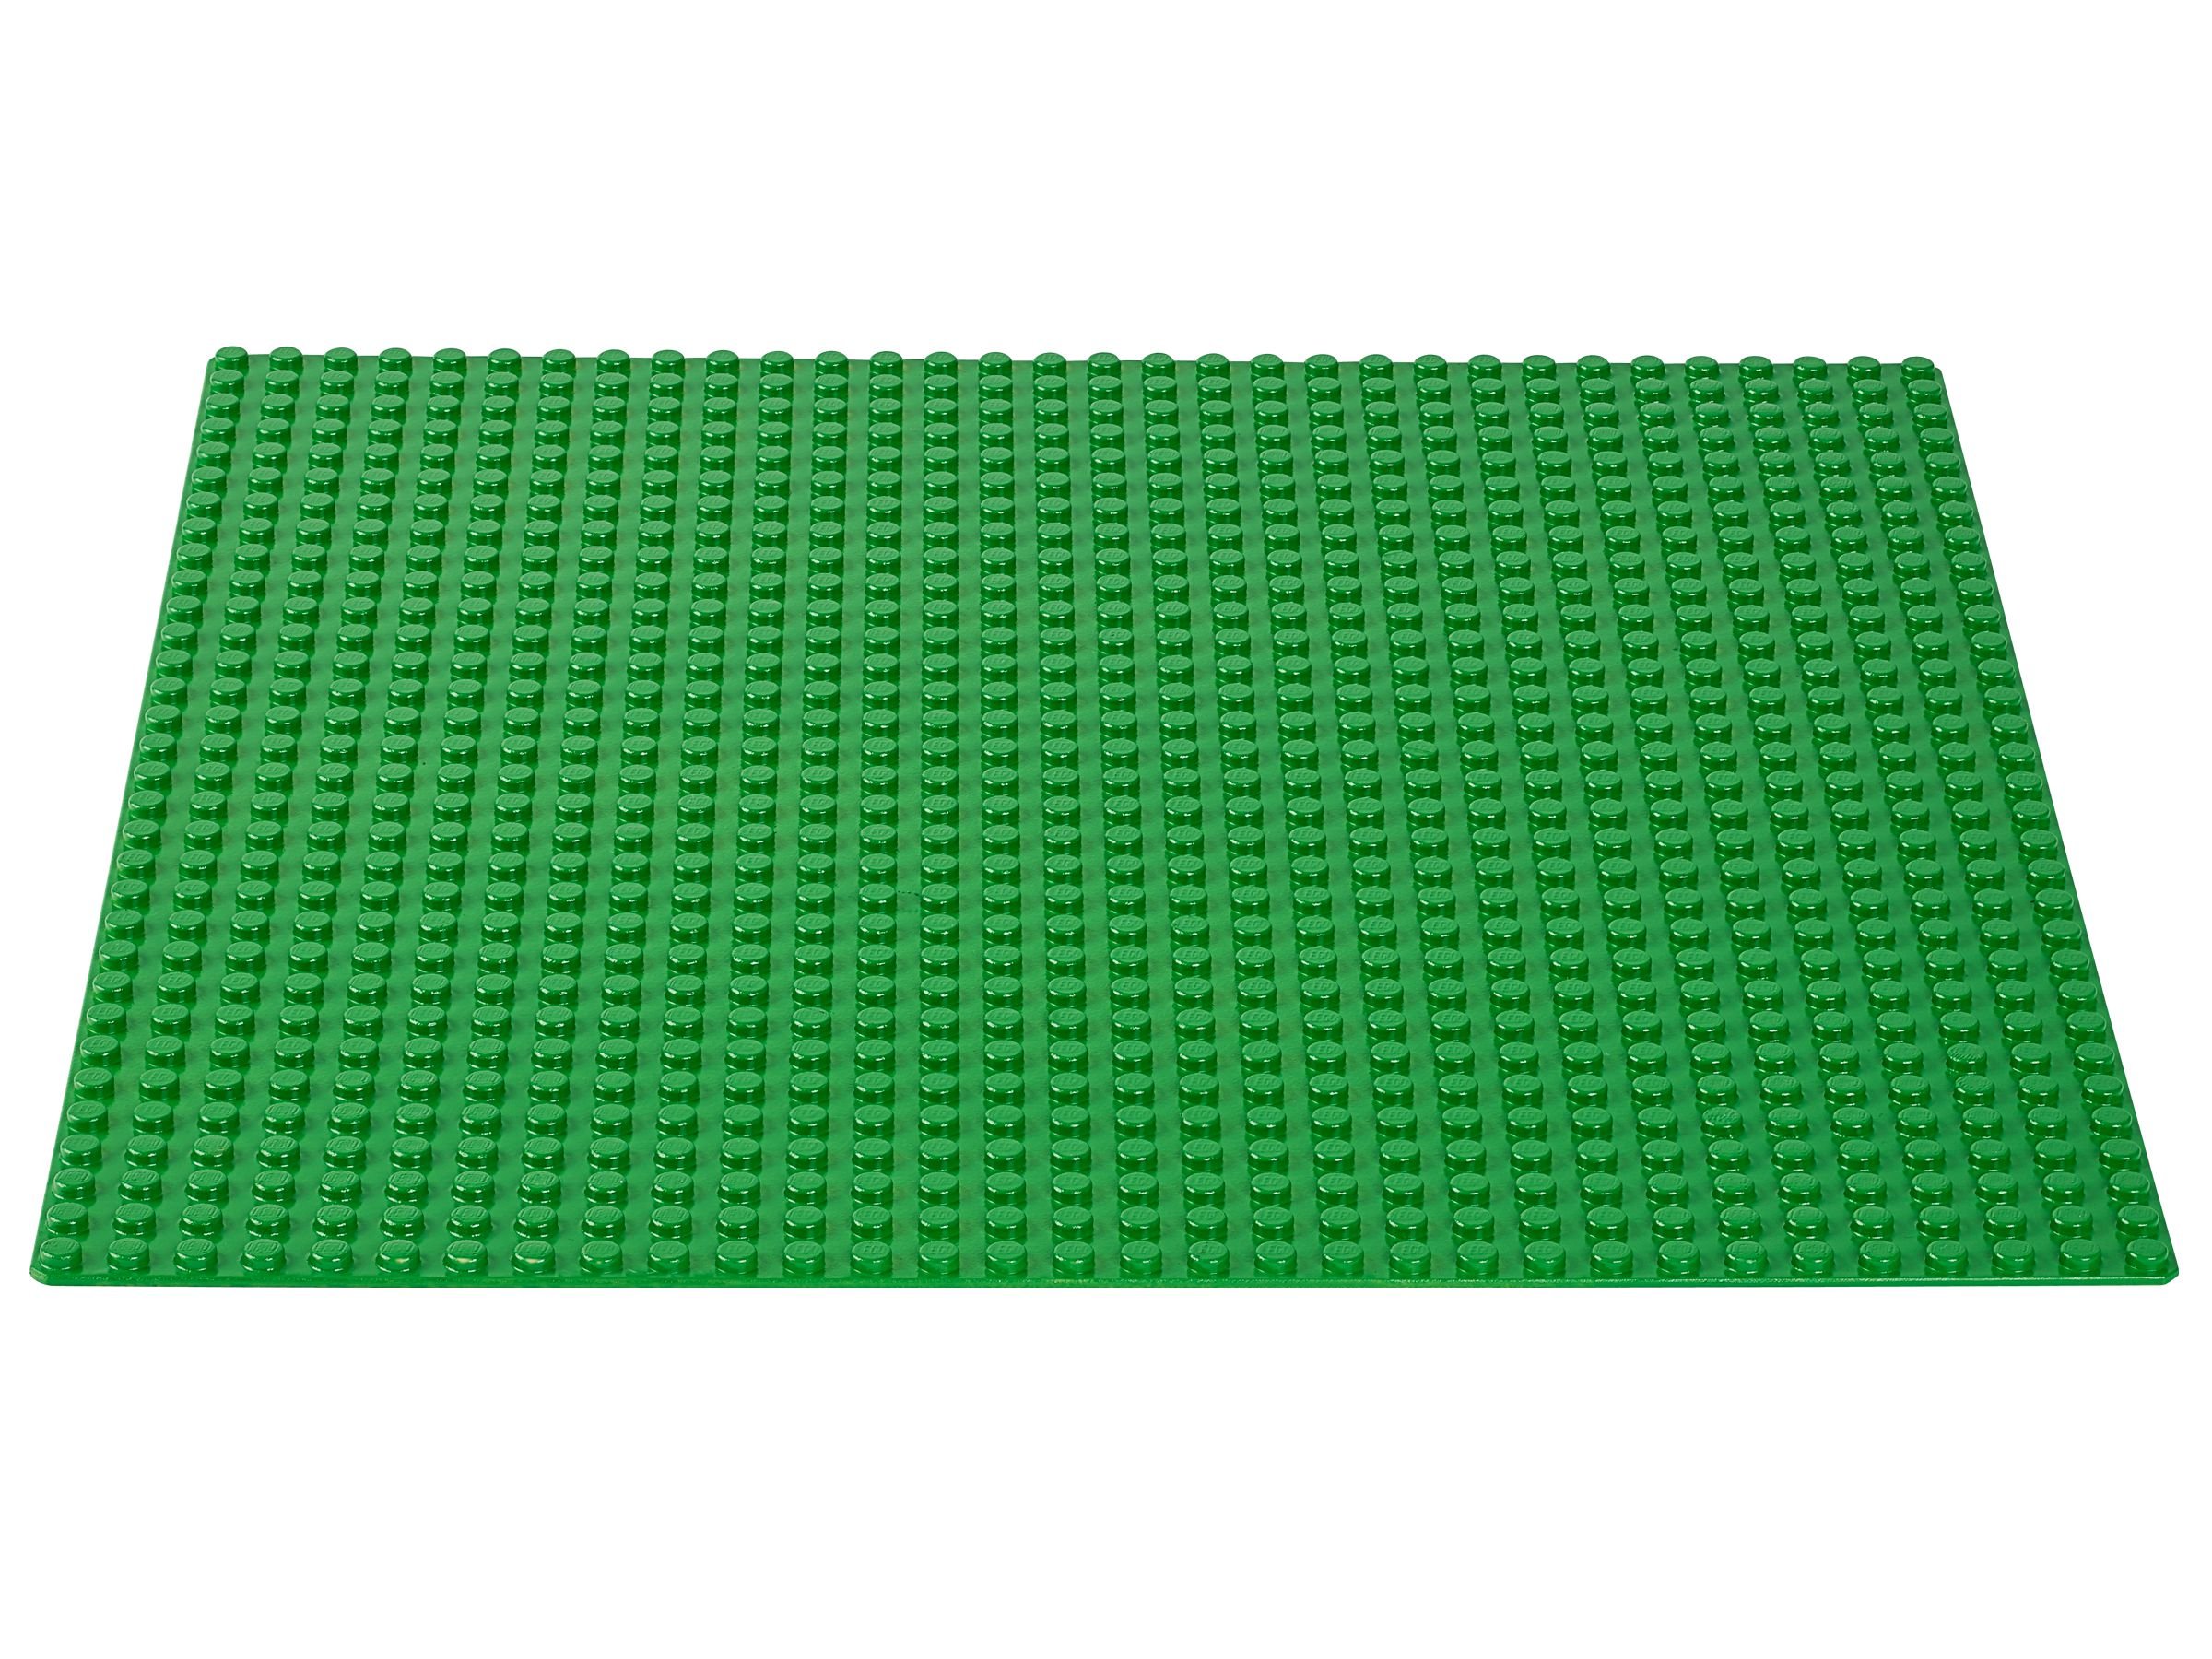 LEGO Classic 10700 32x32 Grüne Grundplatte LEGO_10700.jpg